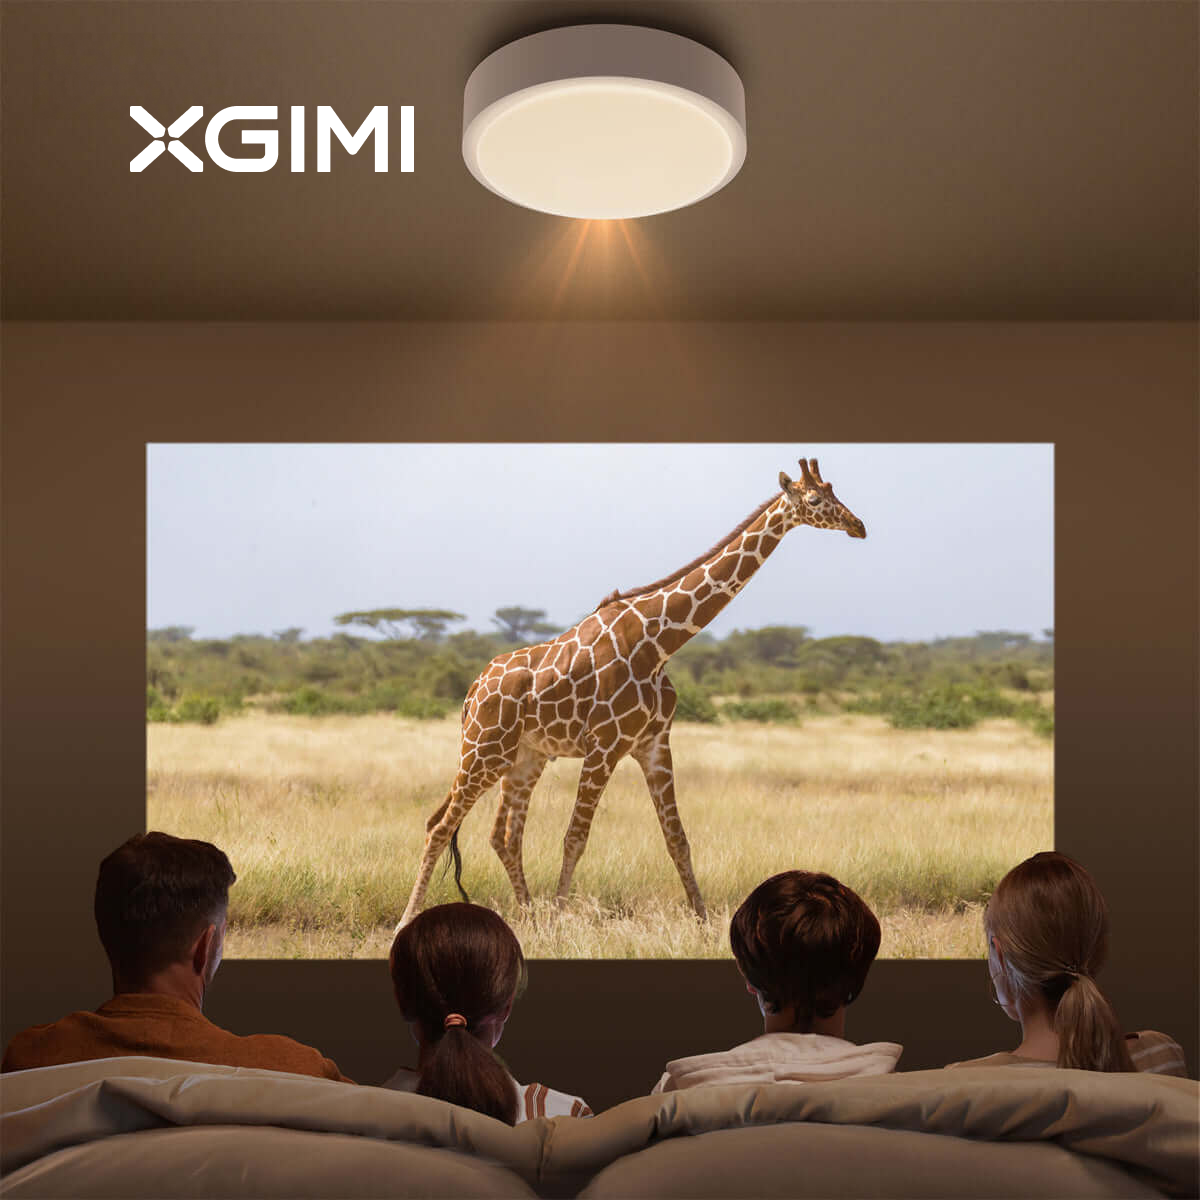 XGIMI Reveals New Innovative Magic Lamp Projector